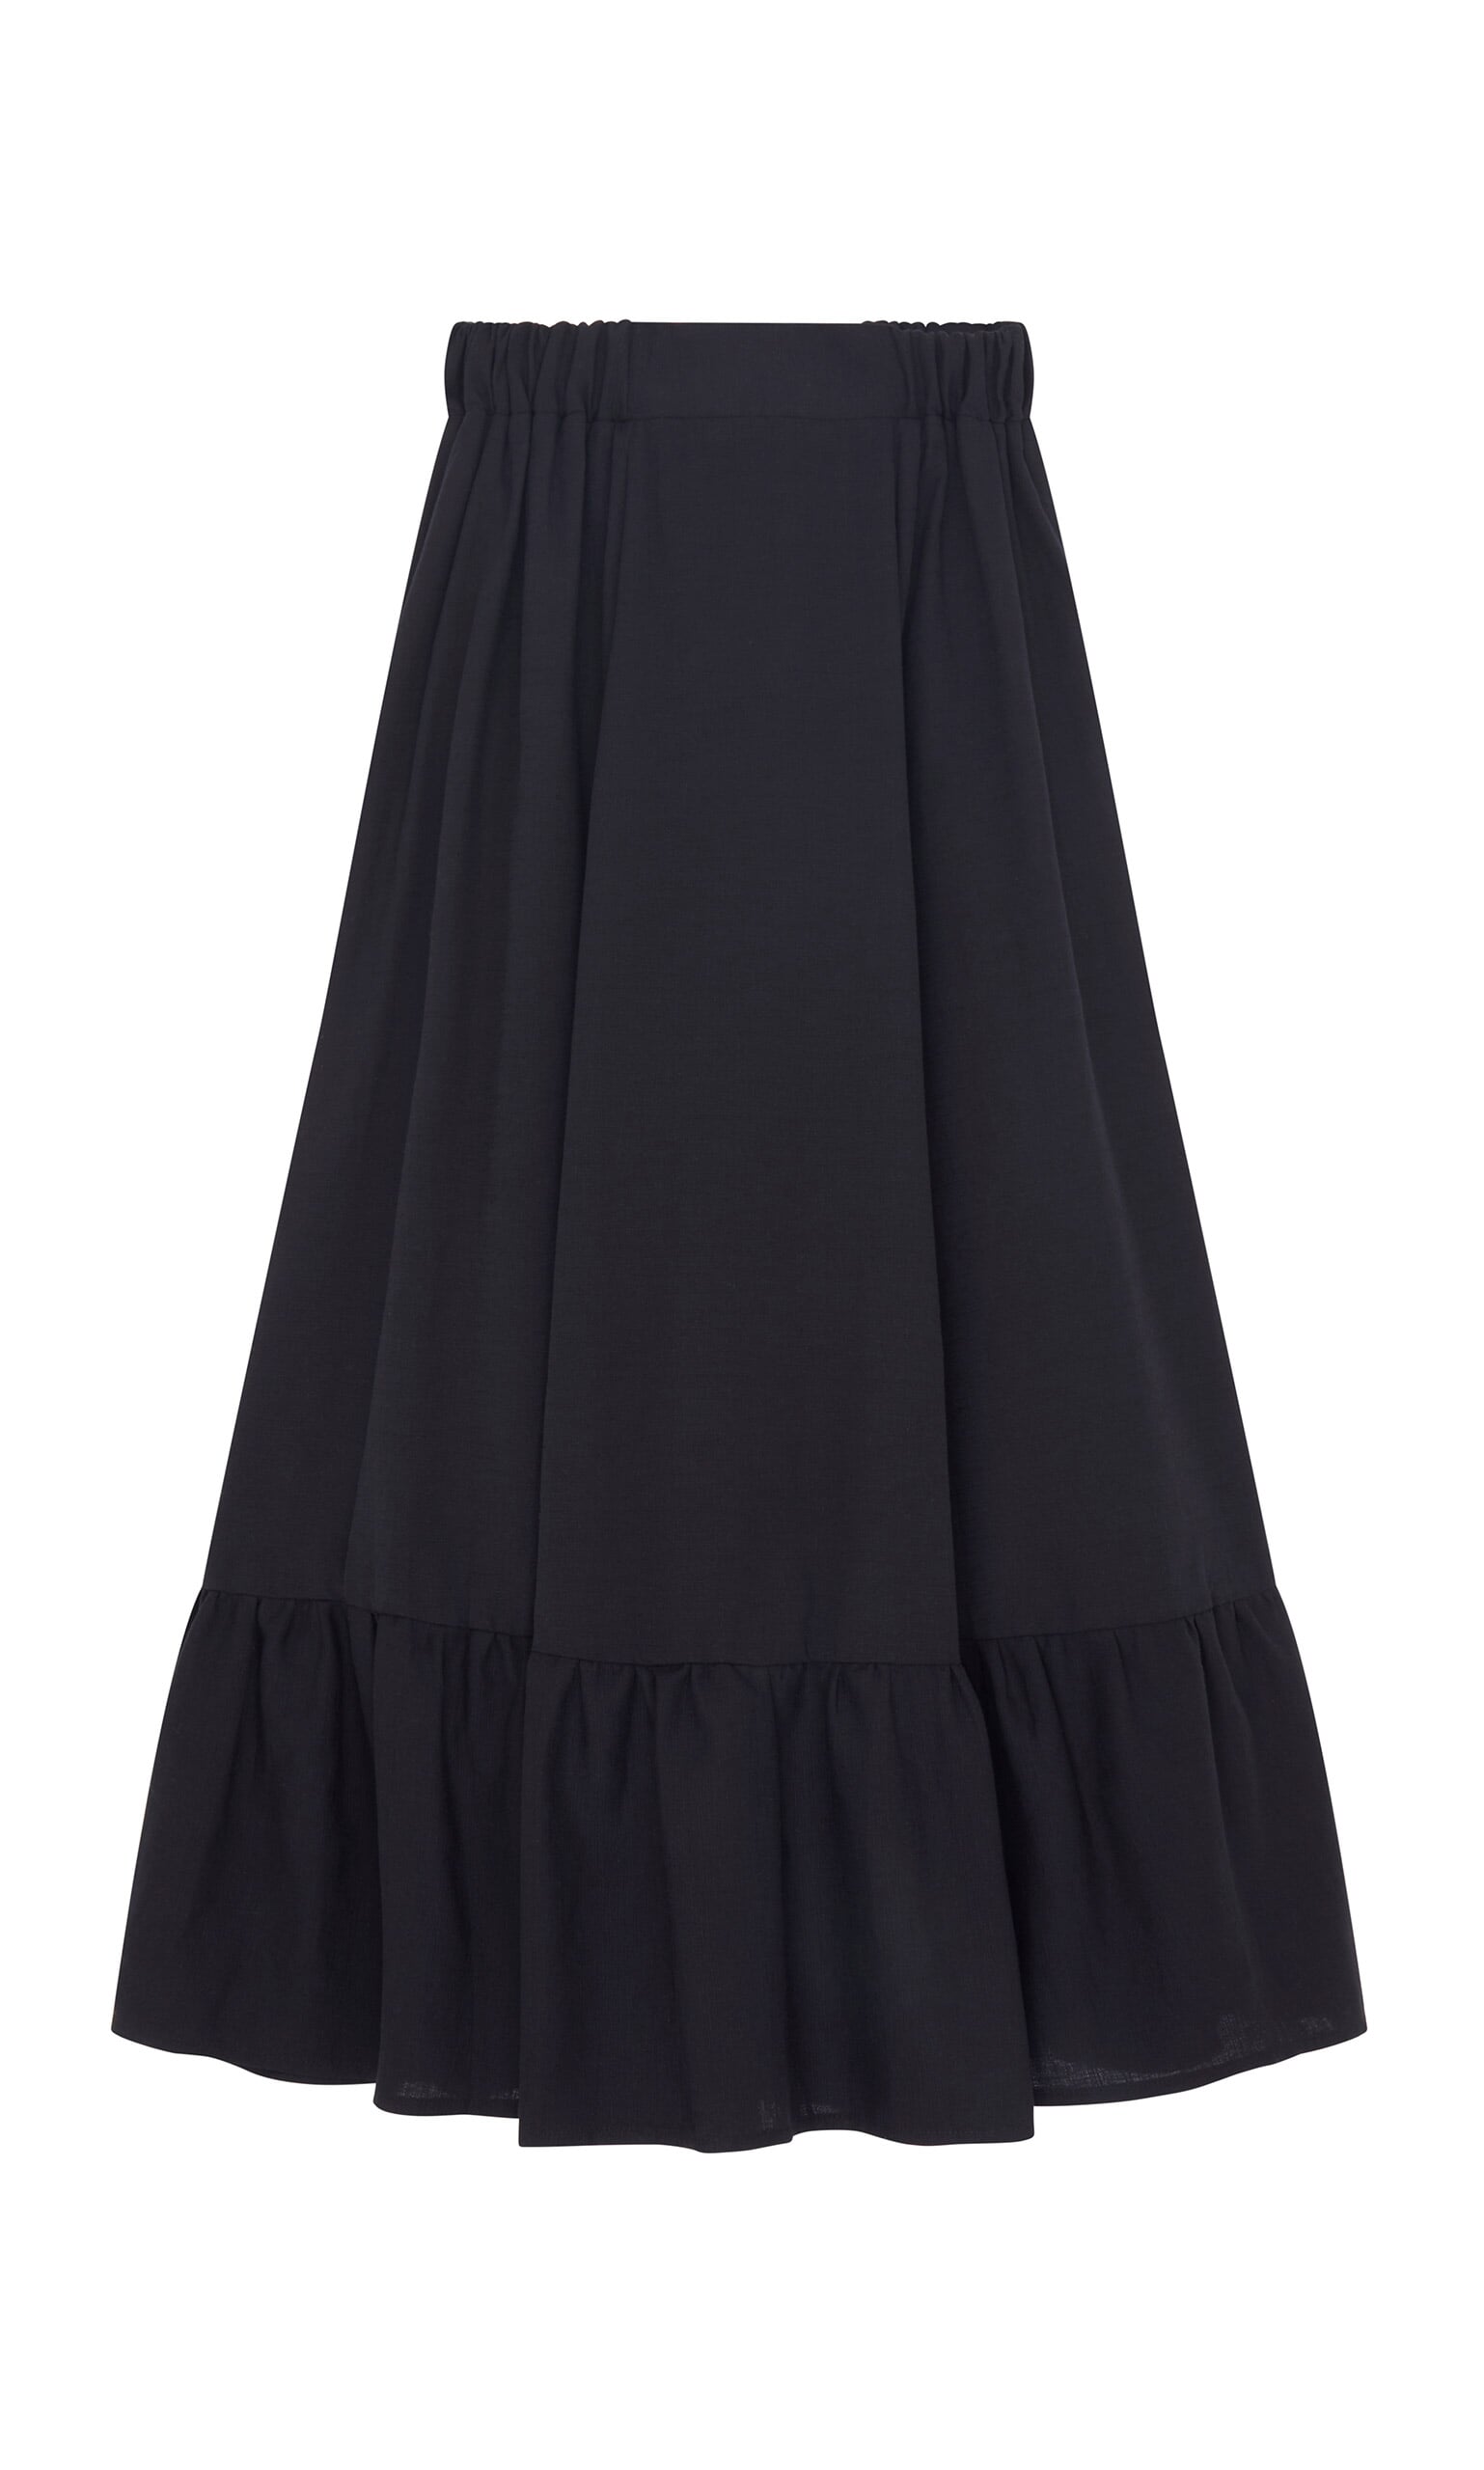 Broadbent skirt - Plümo Ltd